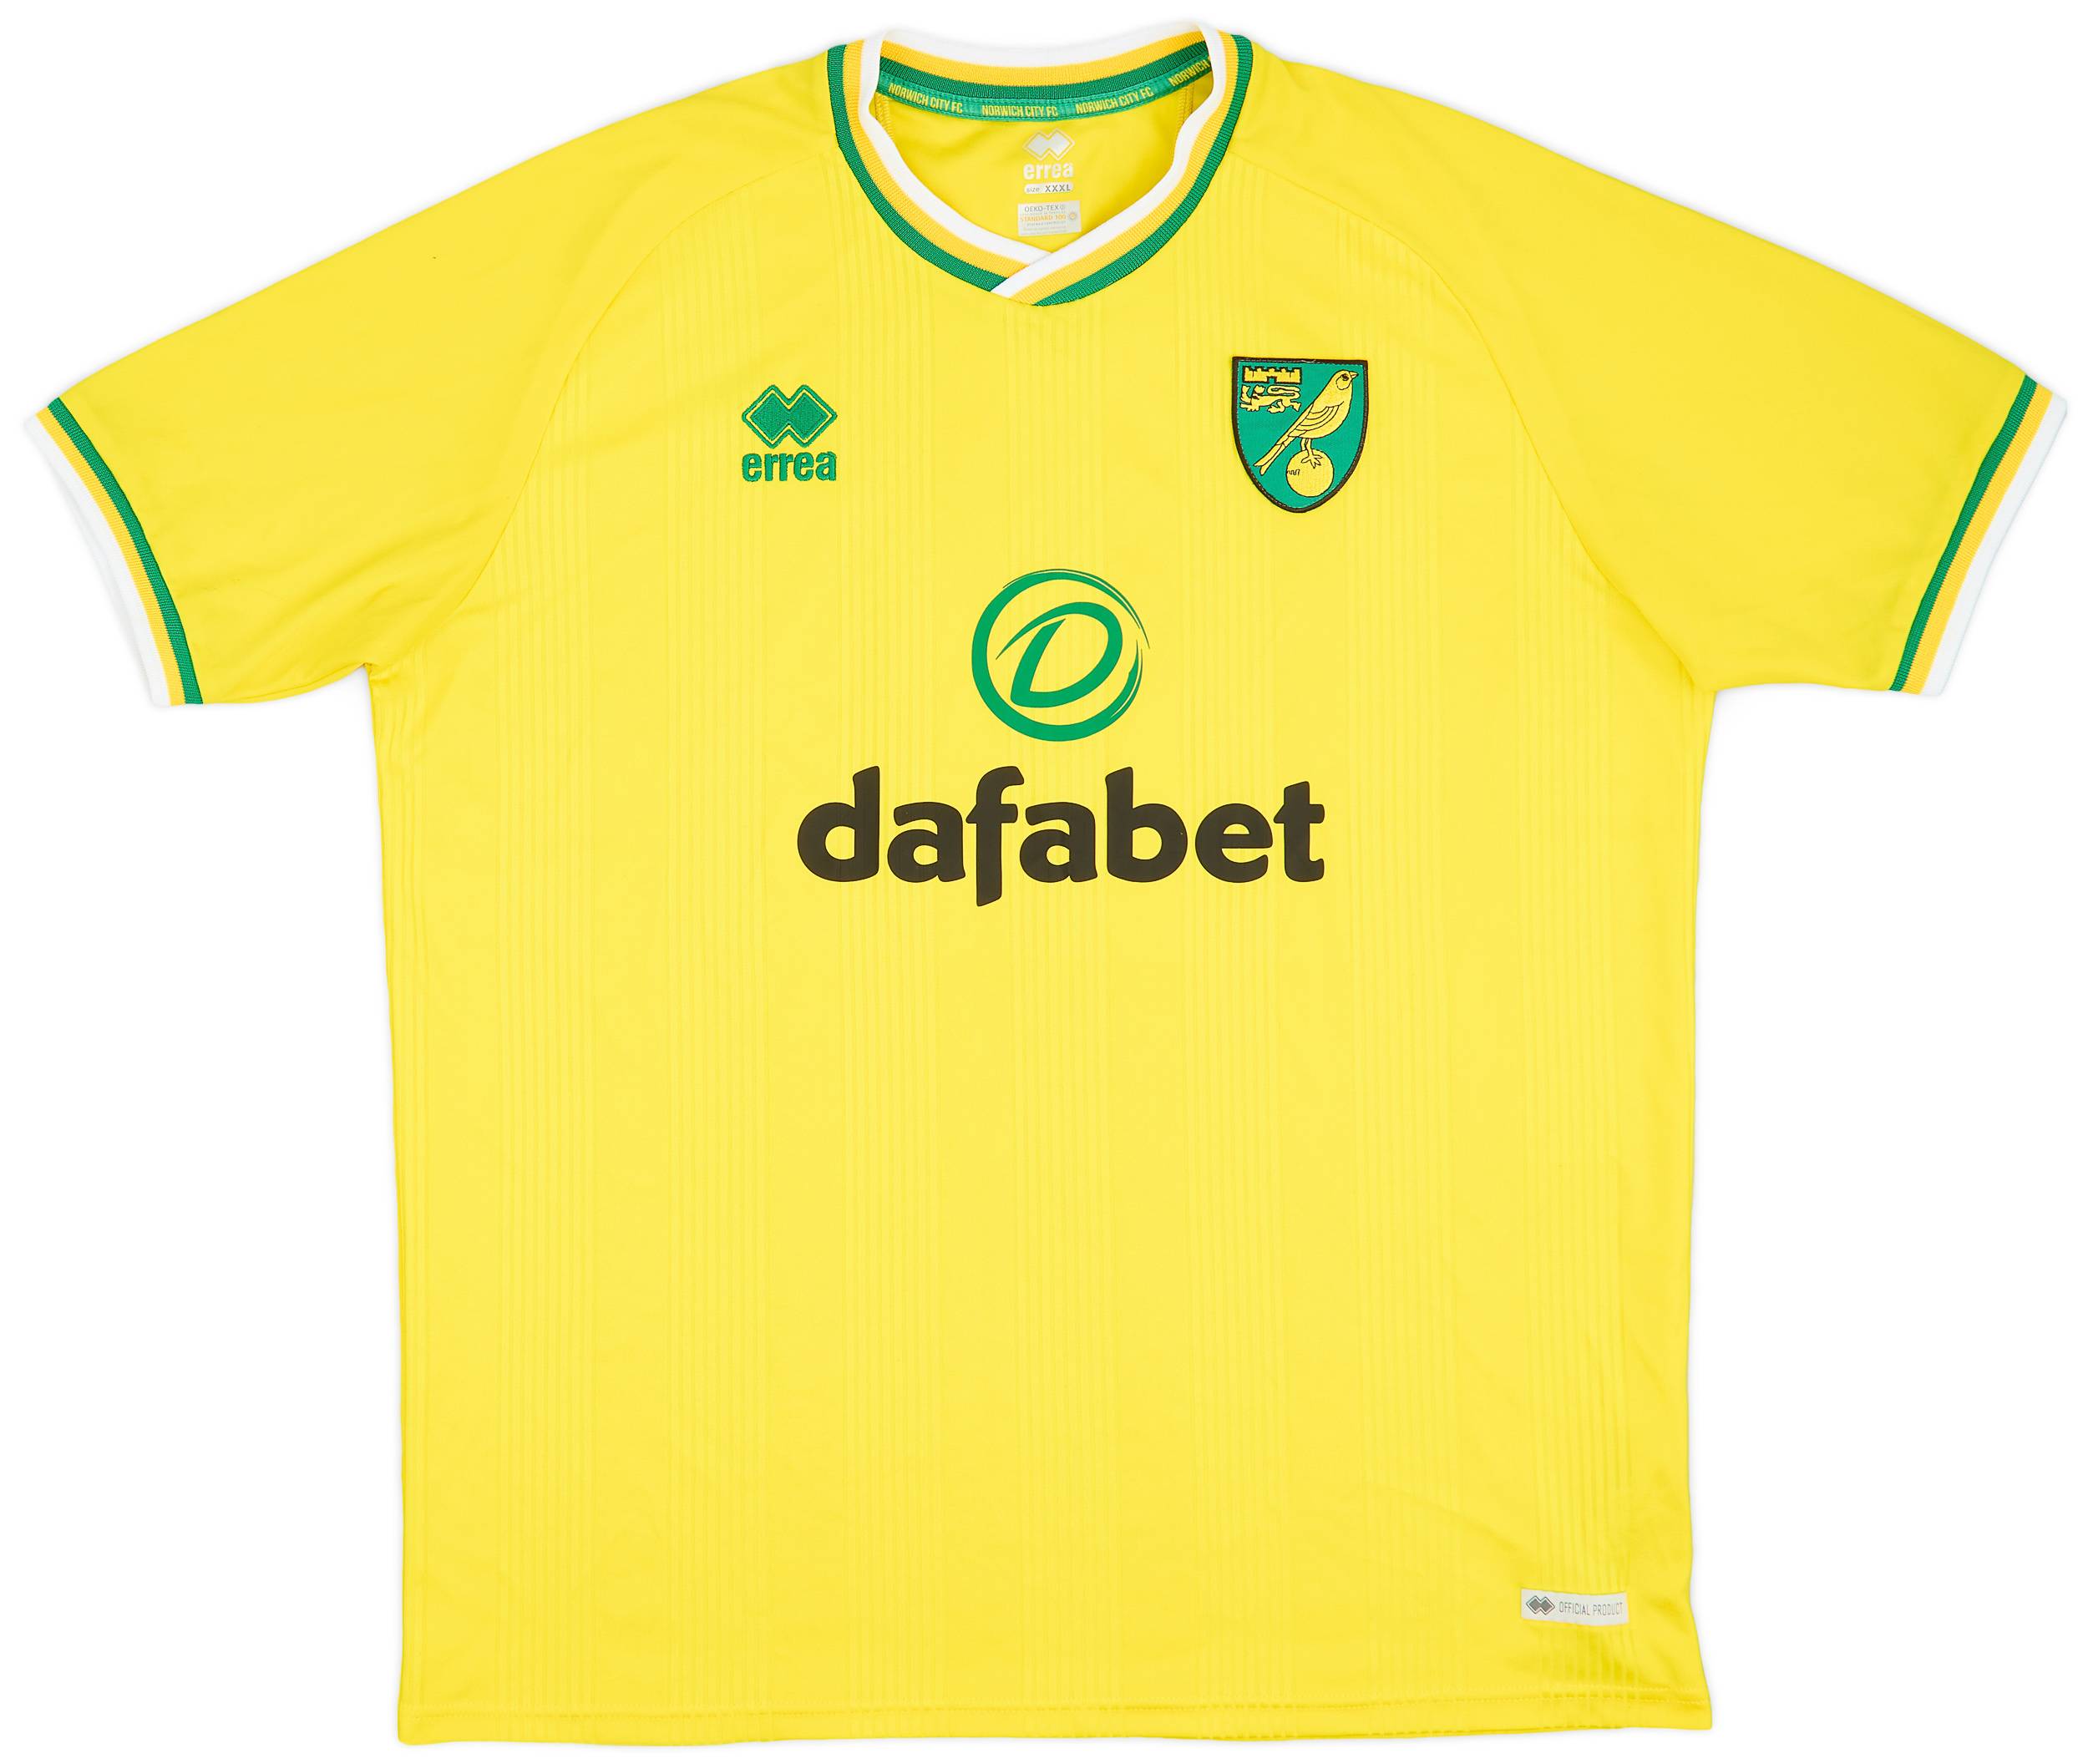 2020-21 Norwich City Home Shirt - 9/10 - (3XL)